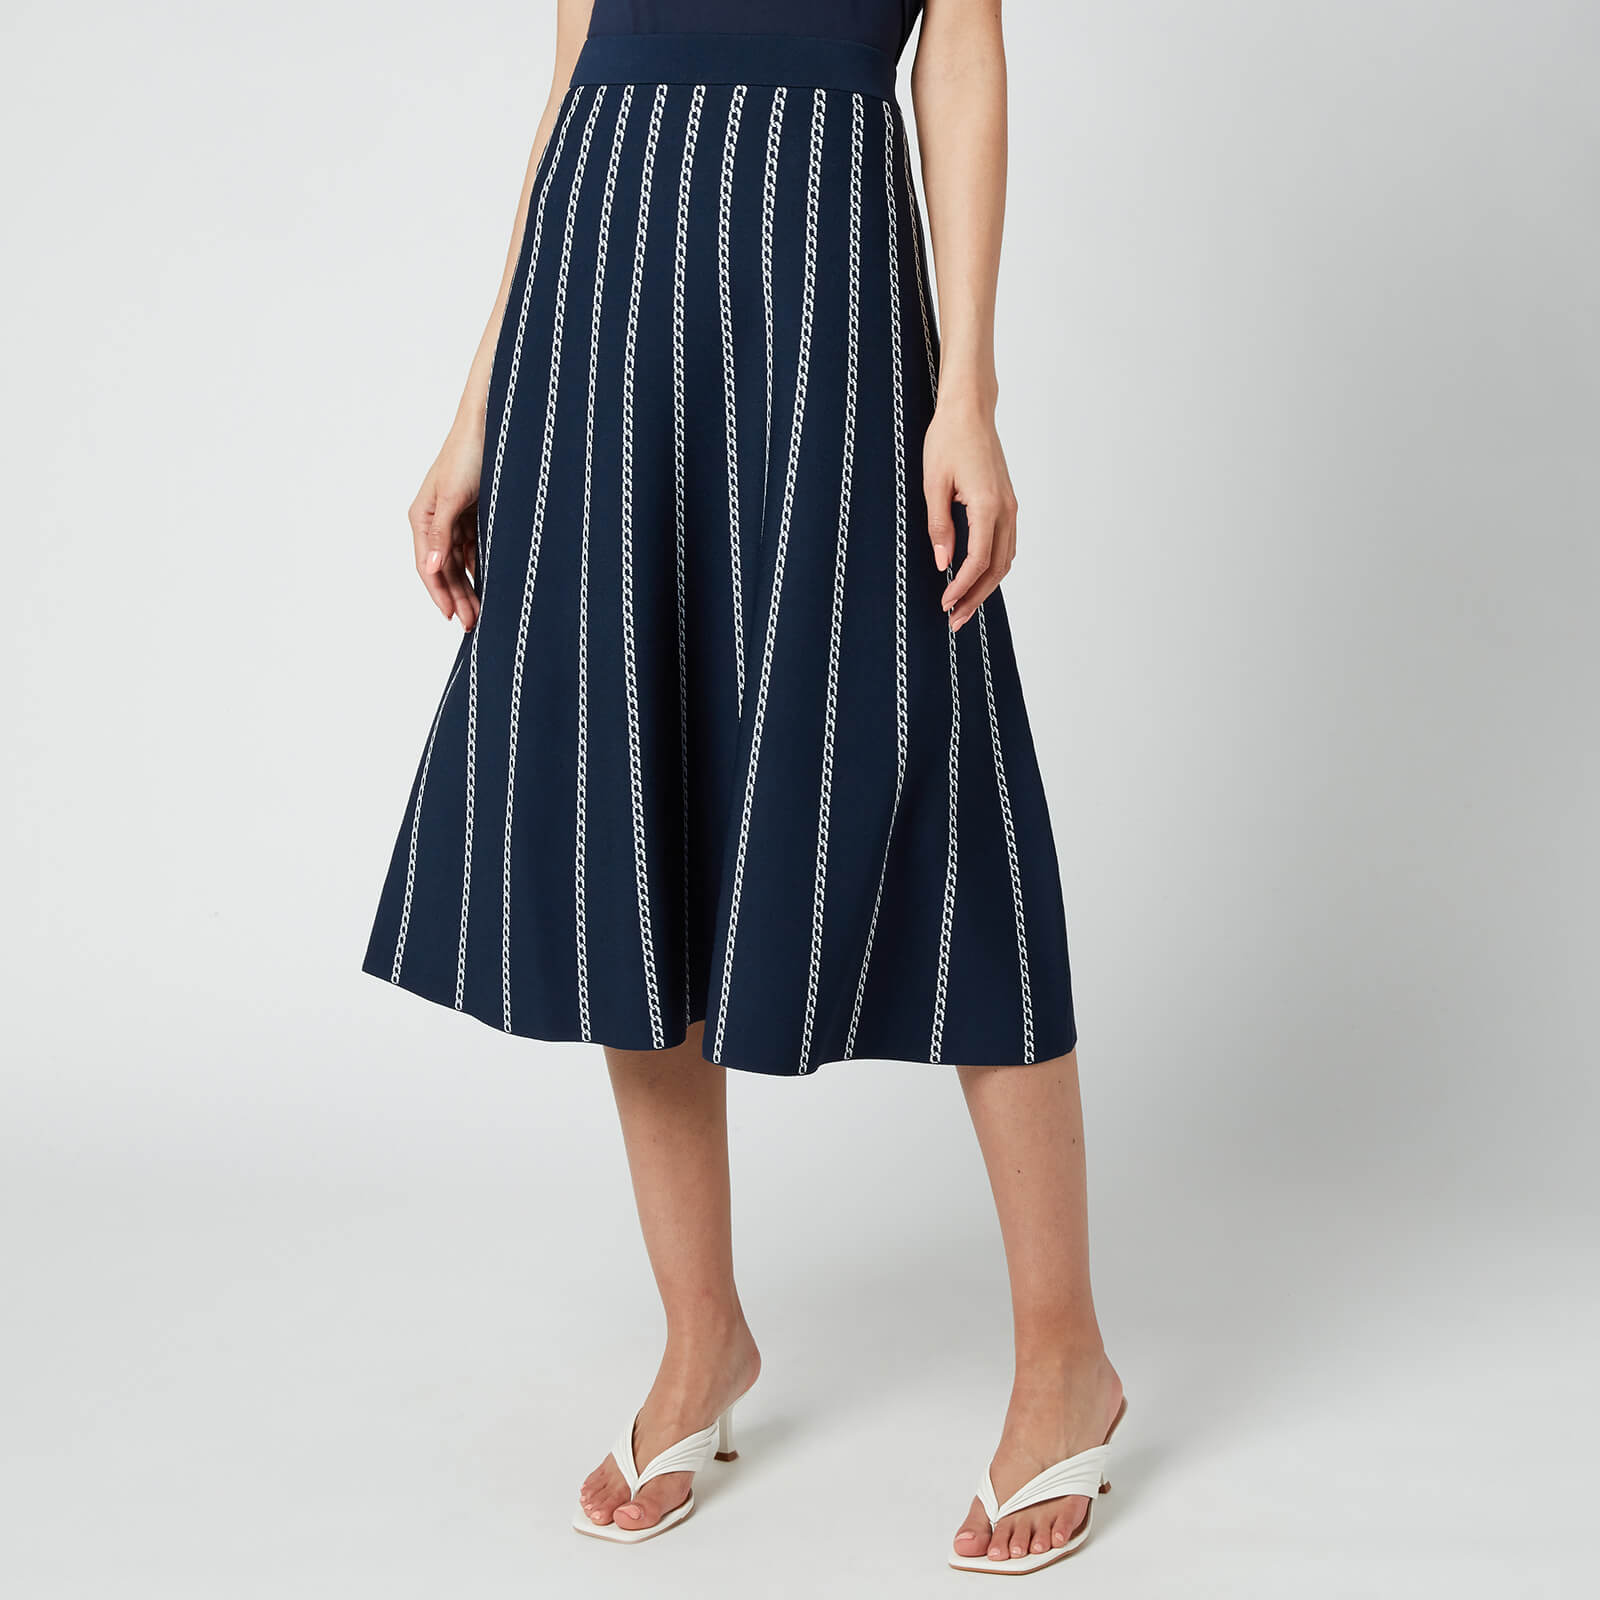 MICHAEL Michael Kors Women's Pin Stripe Chain Skirt - Midnight Blue/White - XS